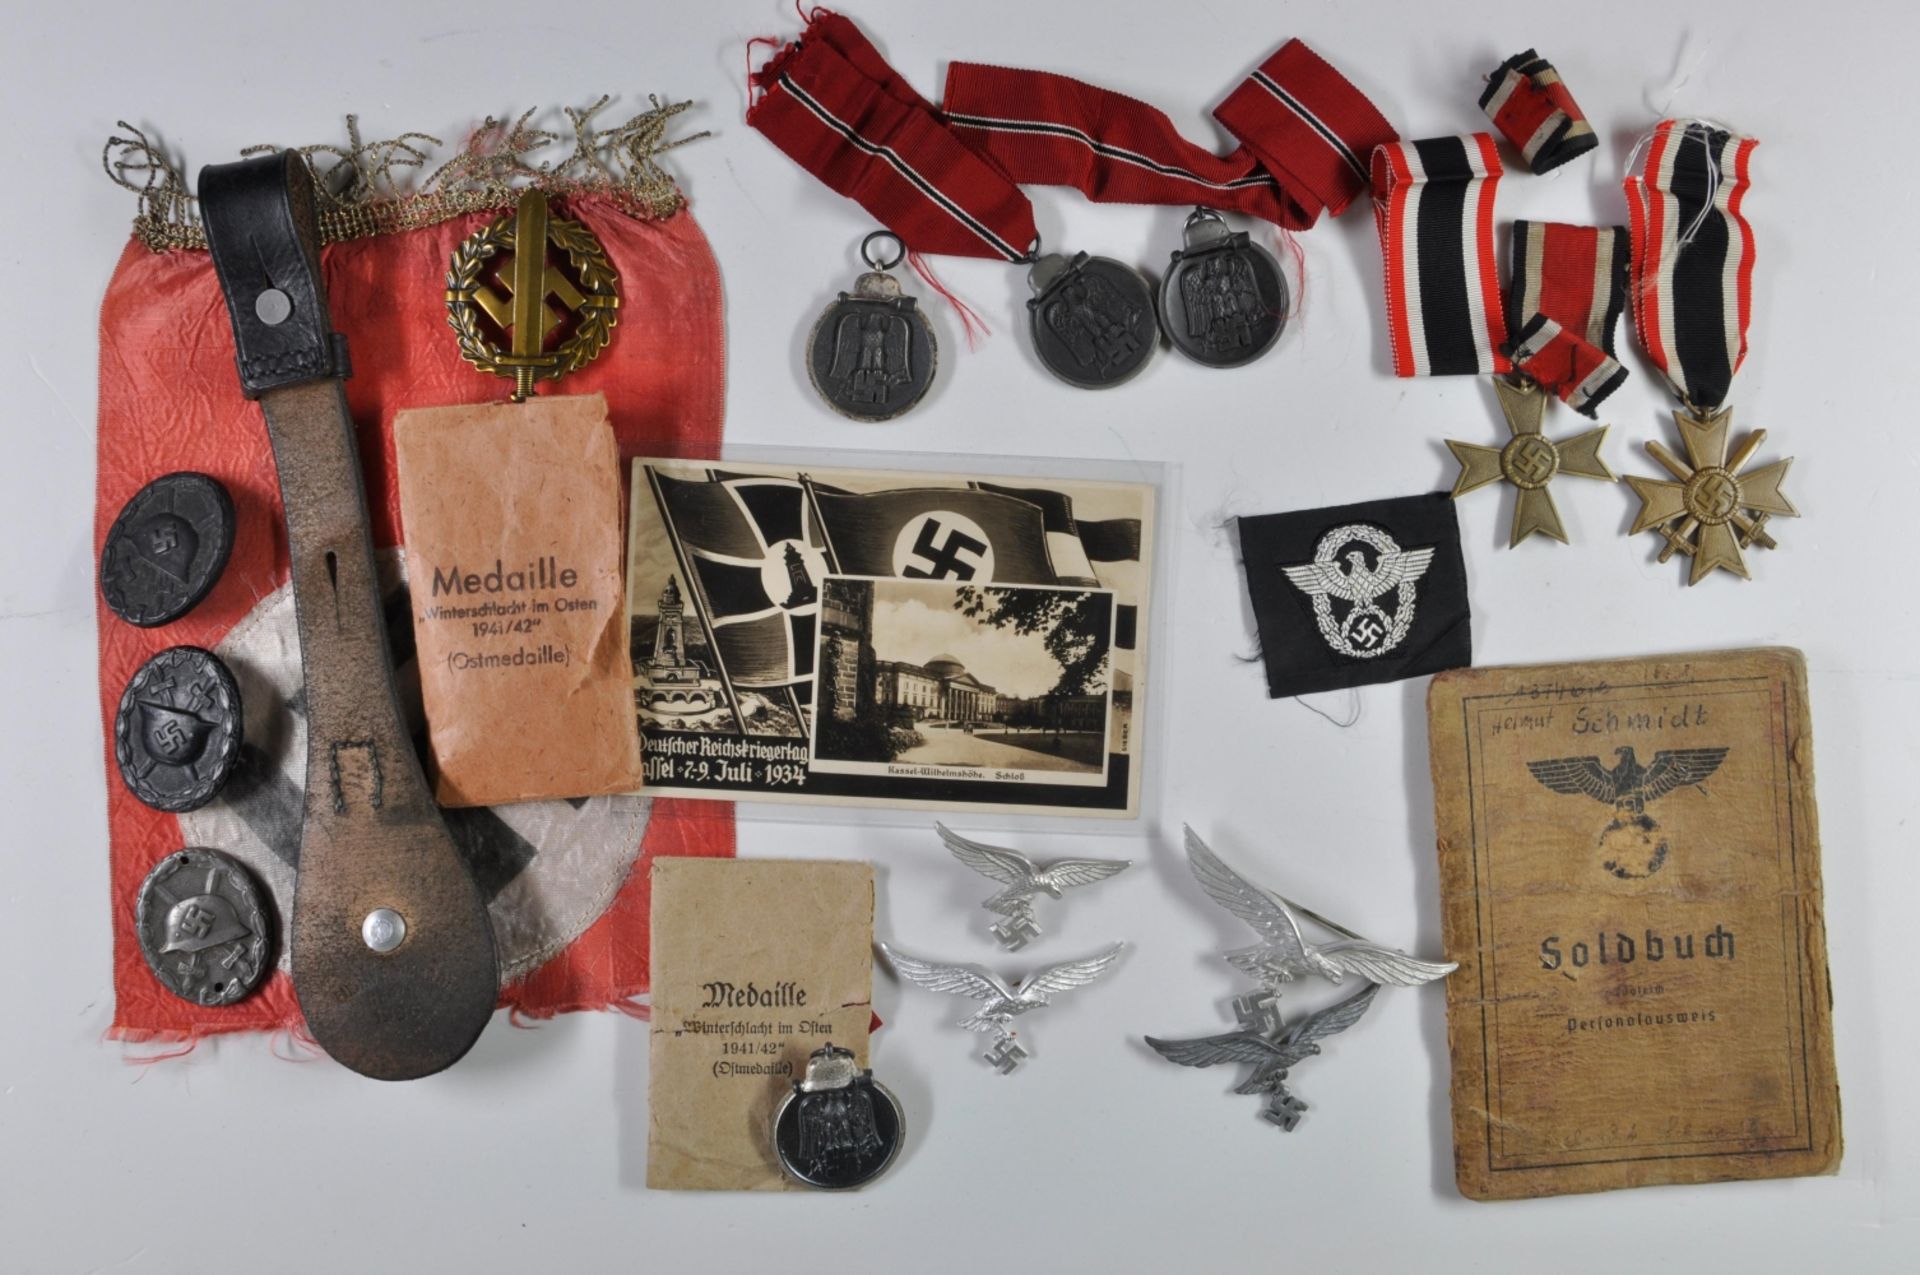 Mixed estate with 5 x east medal, War Merit Cross with swords, War Merit Cross, 3 x Purple Heart, SA